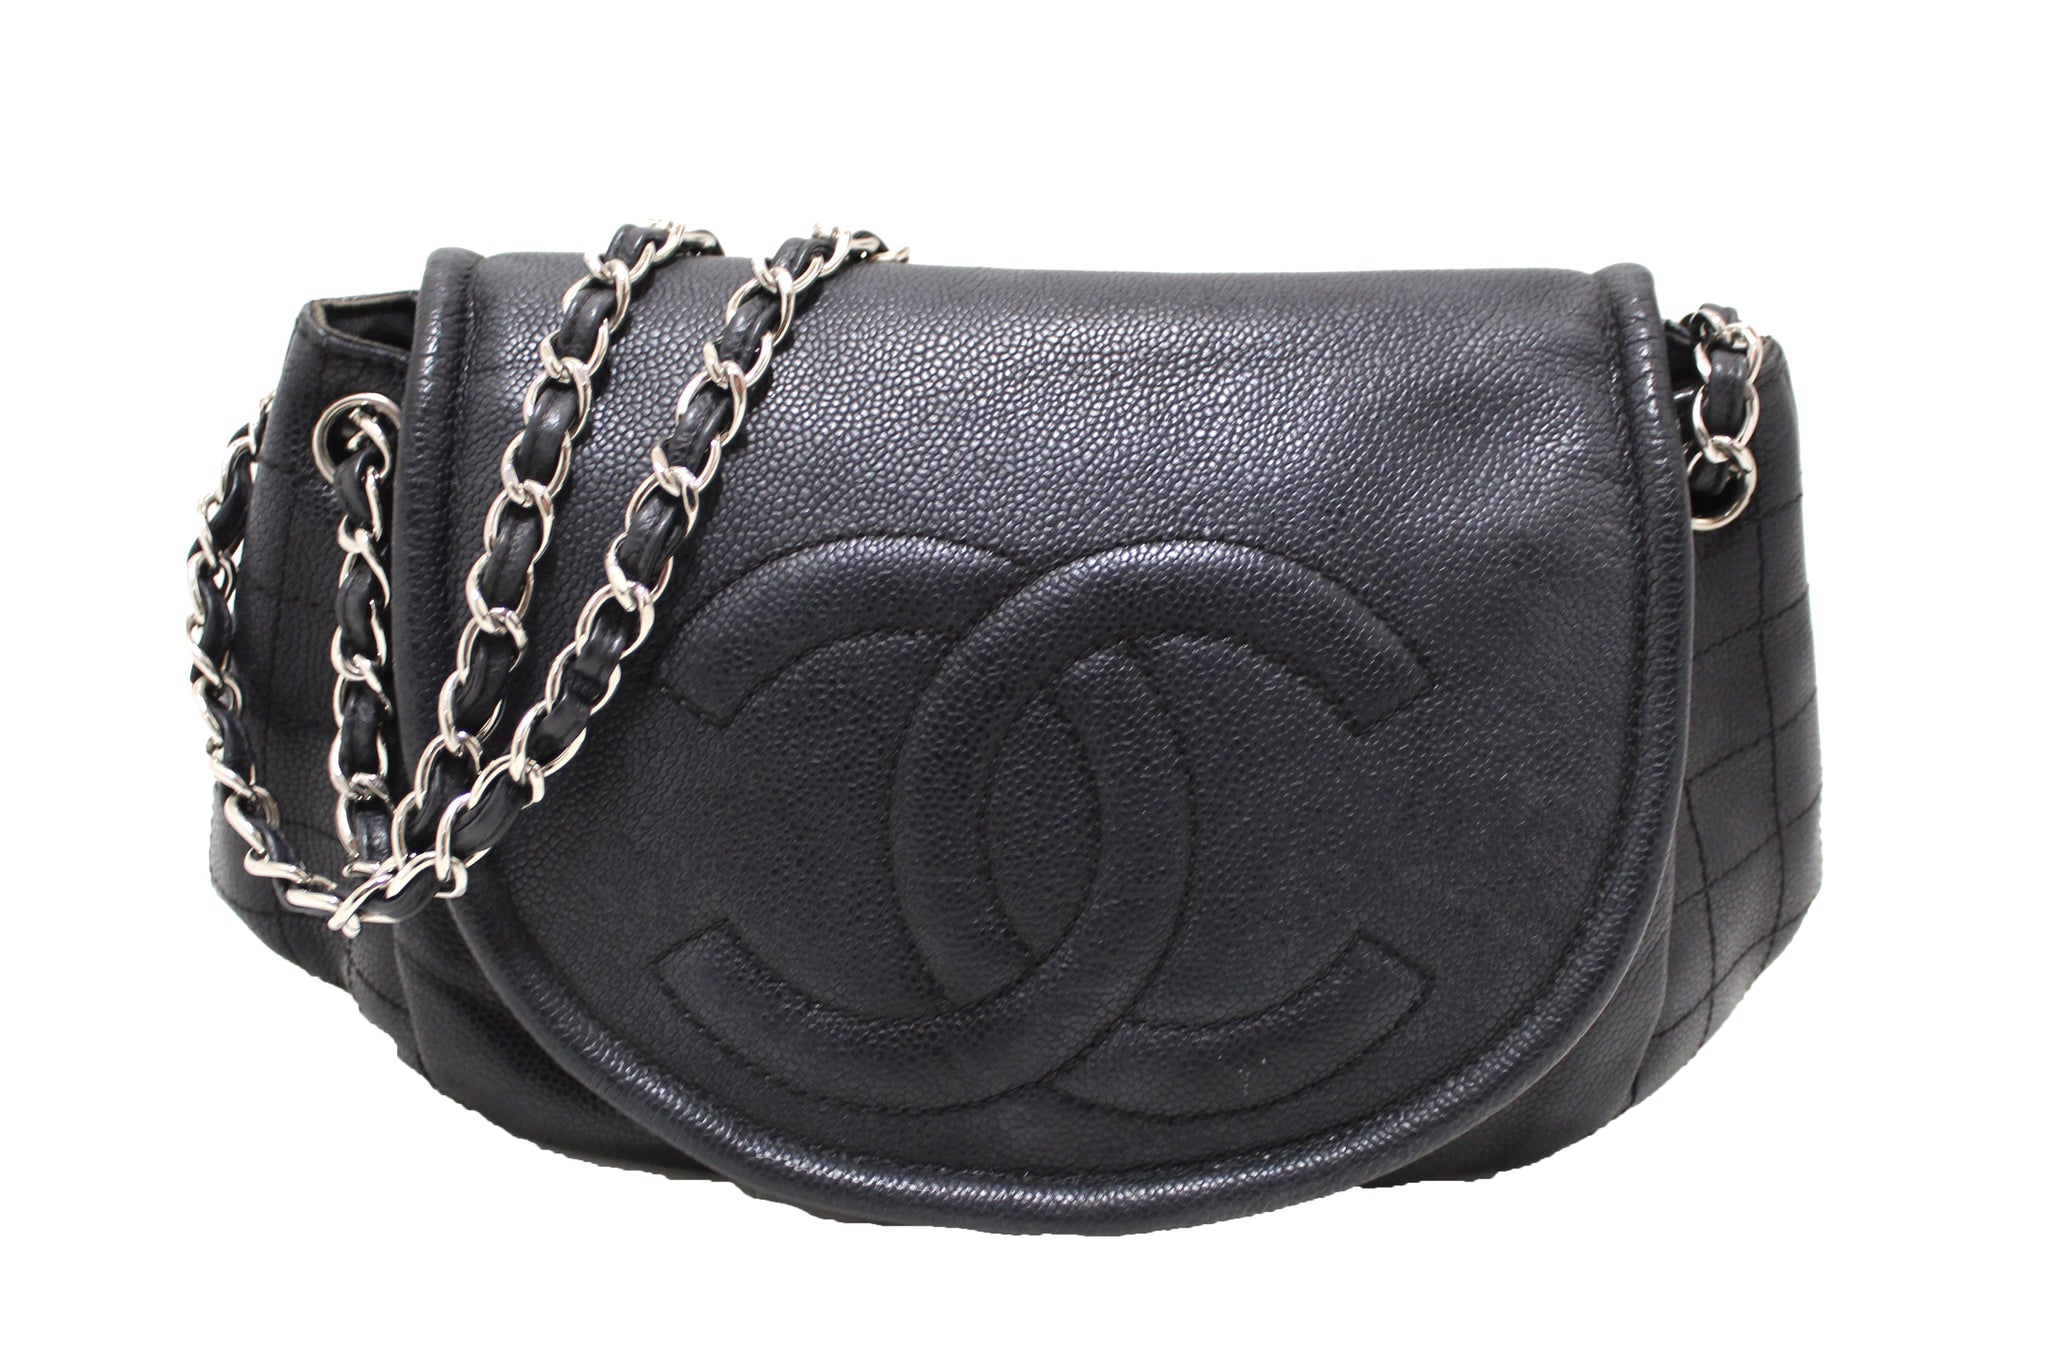 Chanel Red Caviar Leather Half Moon Shoulder Bag